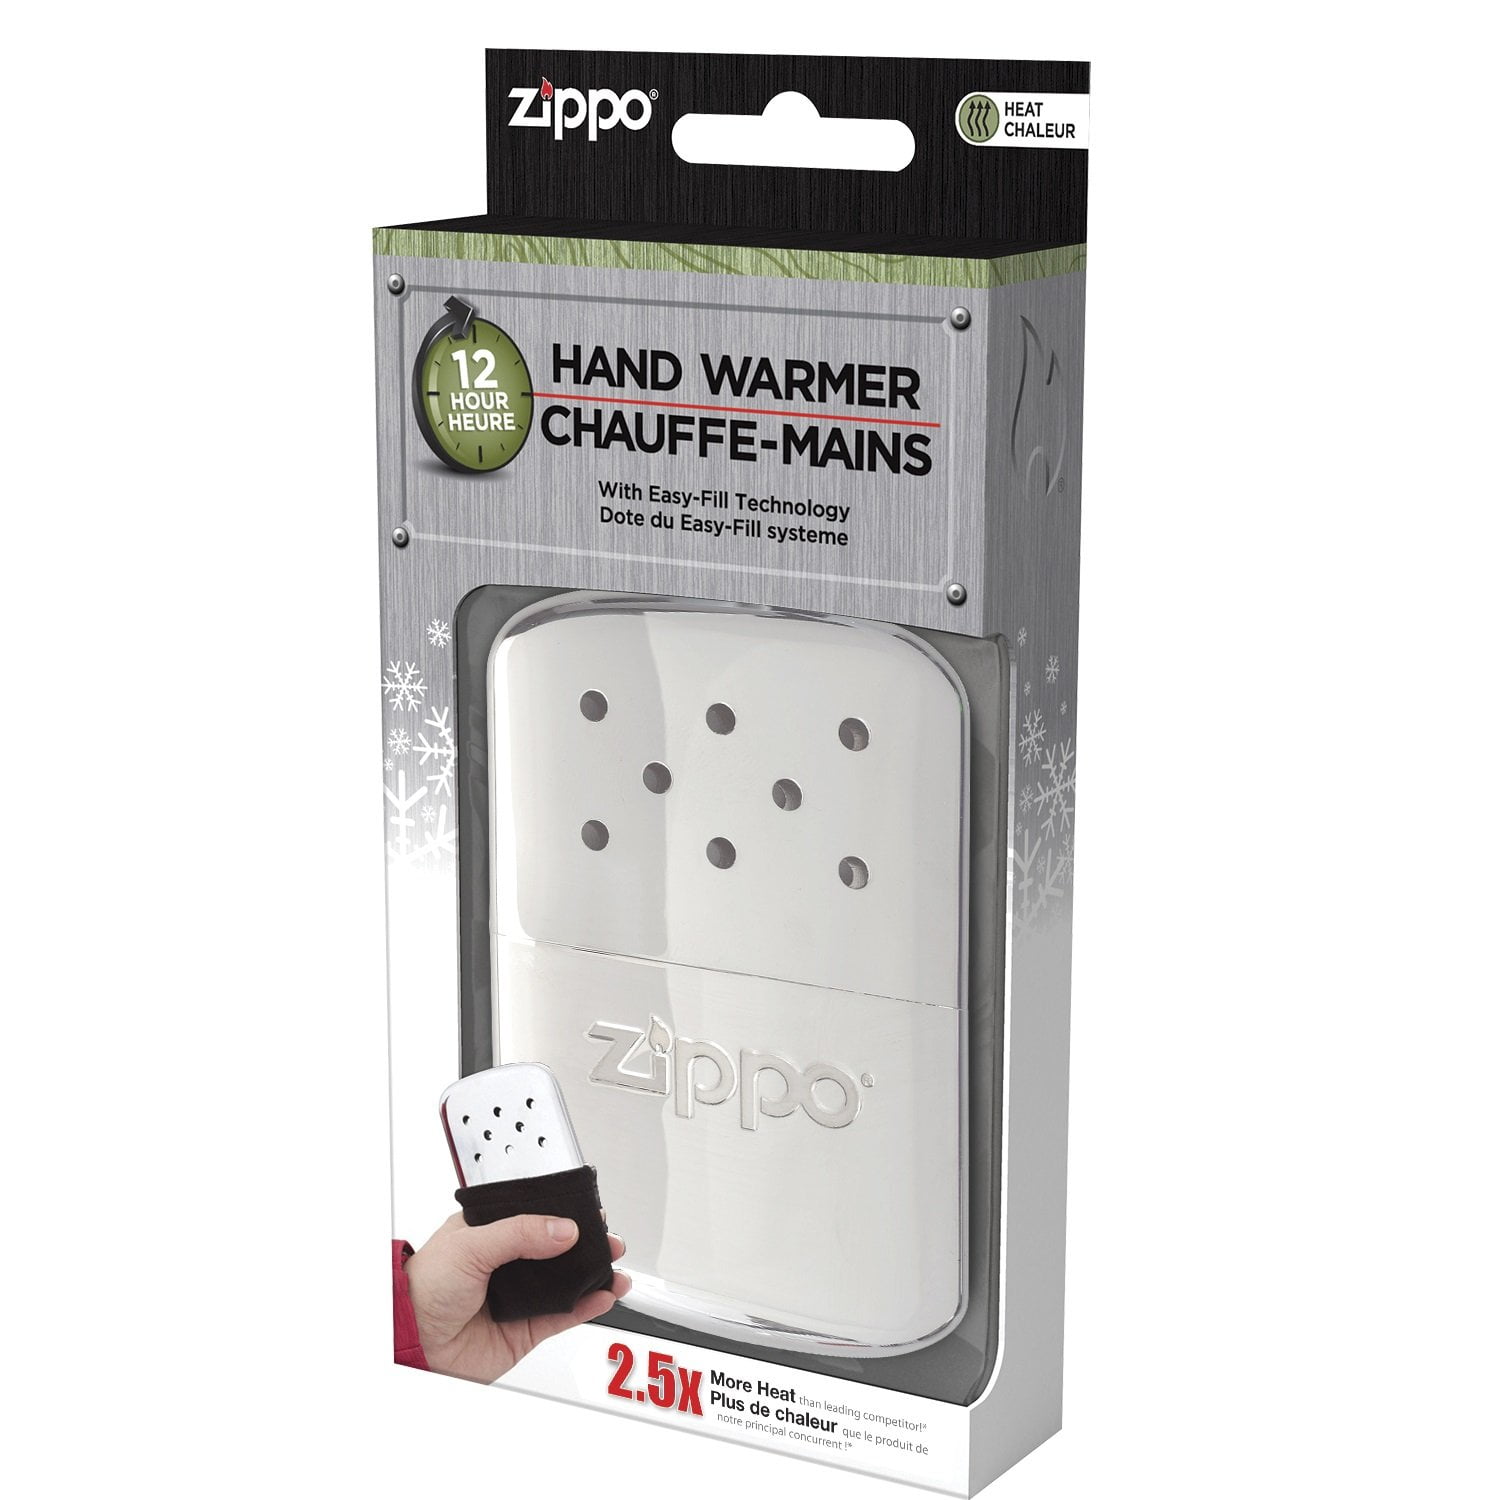 Hand Warmer Small Hand Warmers Portable 12 Hour Warmer High Polish Chrome 